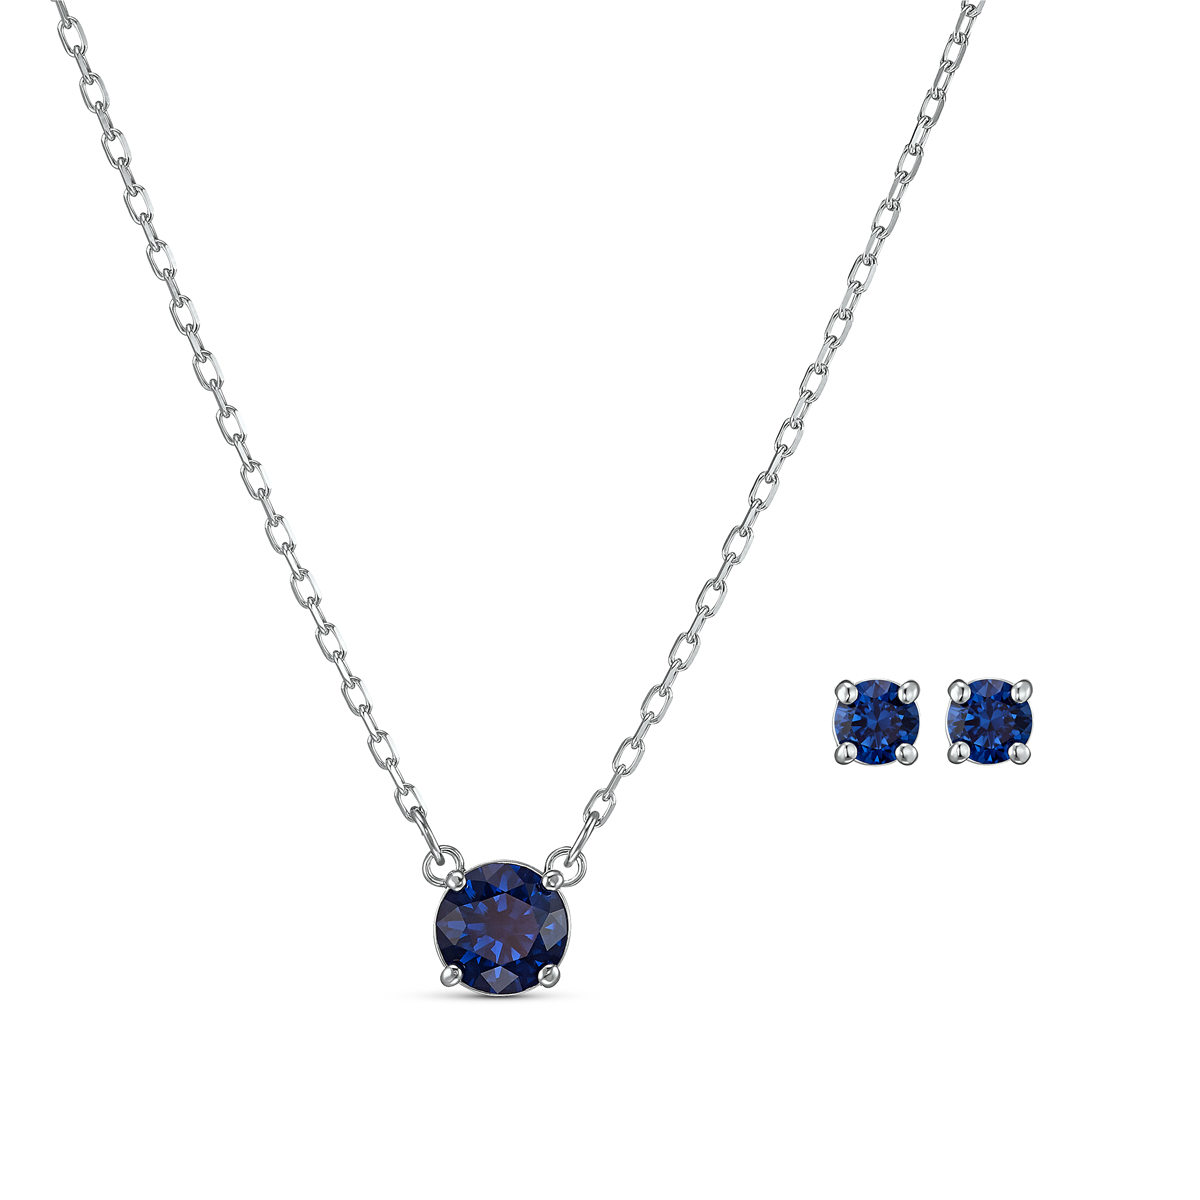 Swarovski Crystal and Rhodium Attract Blue Round Necklace Set